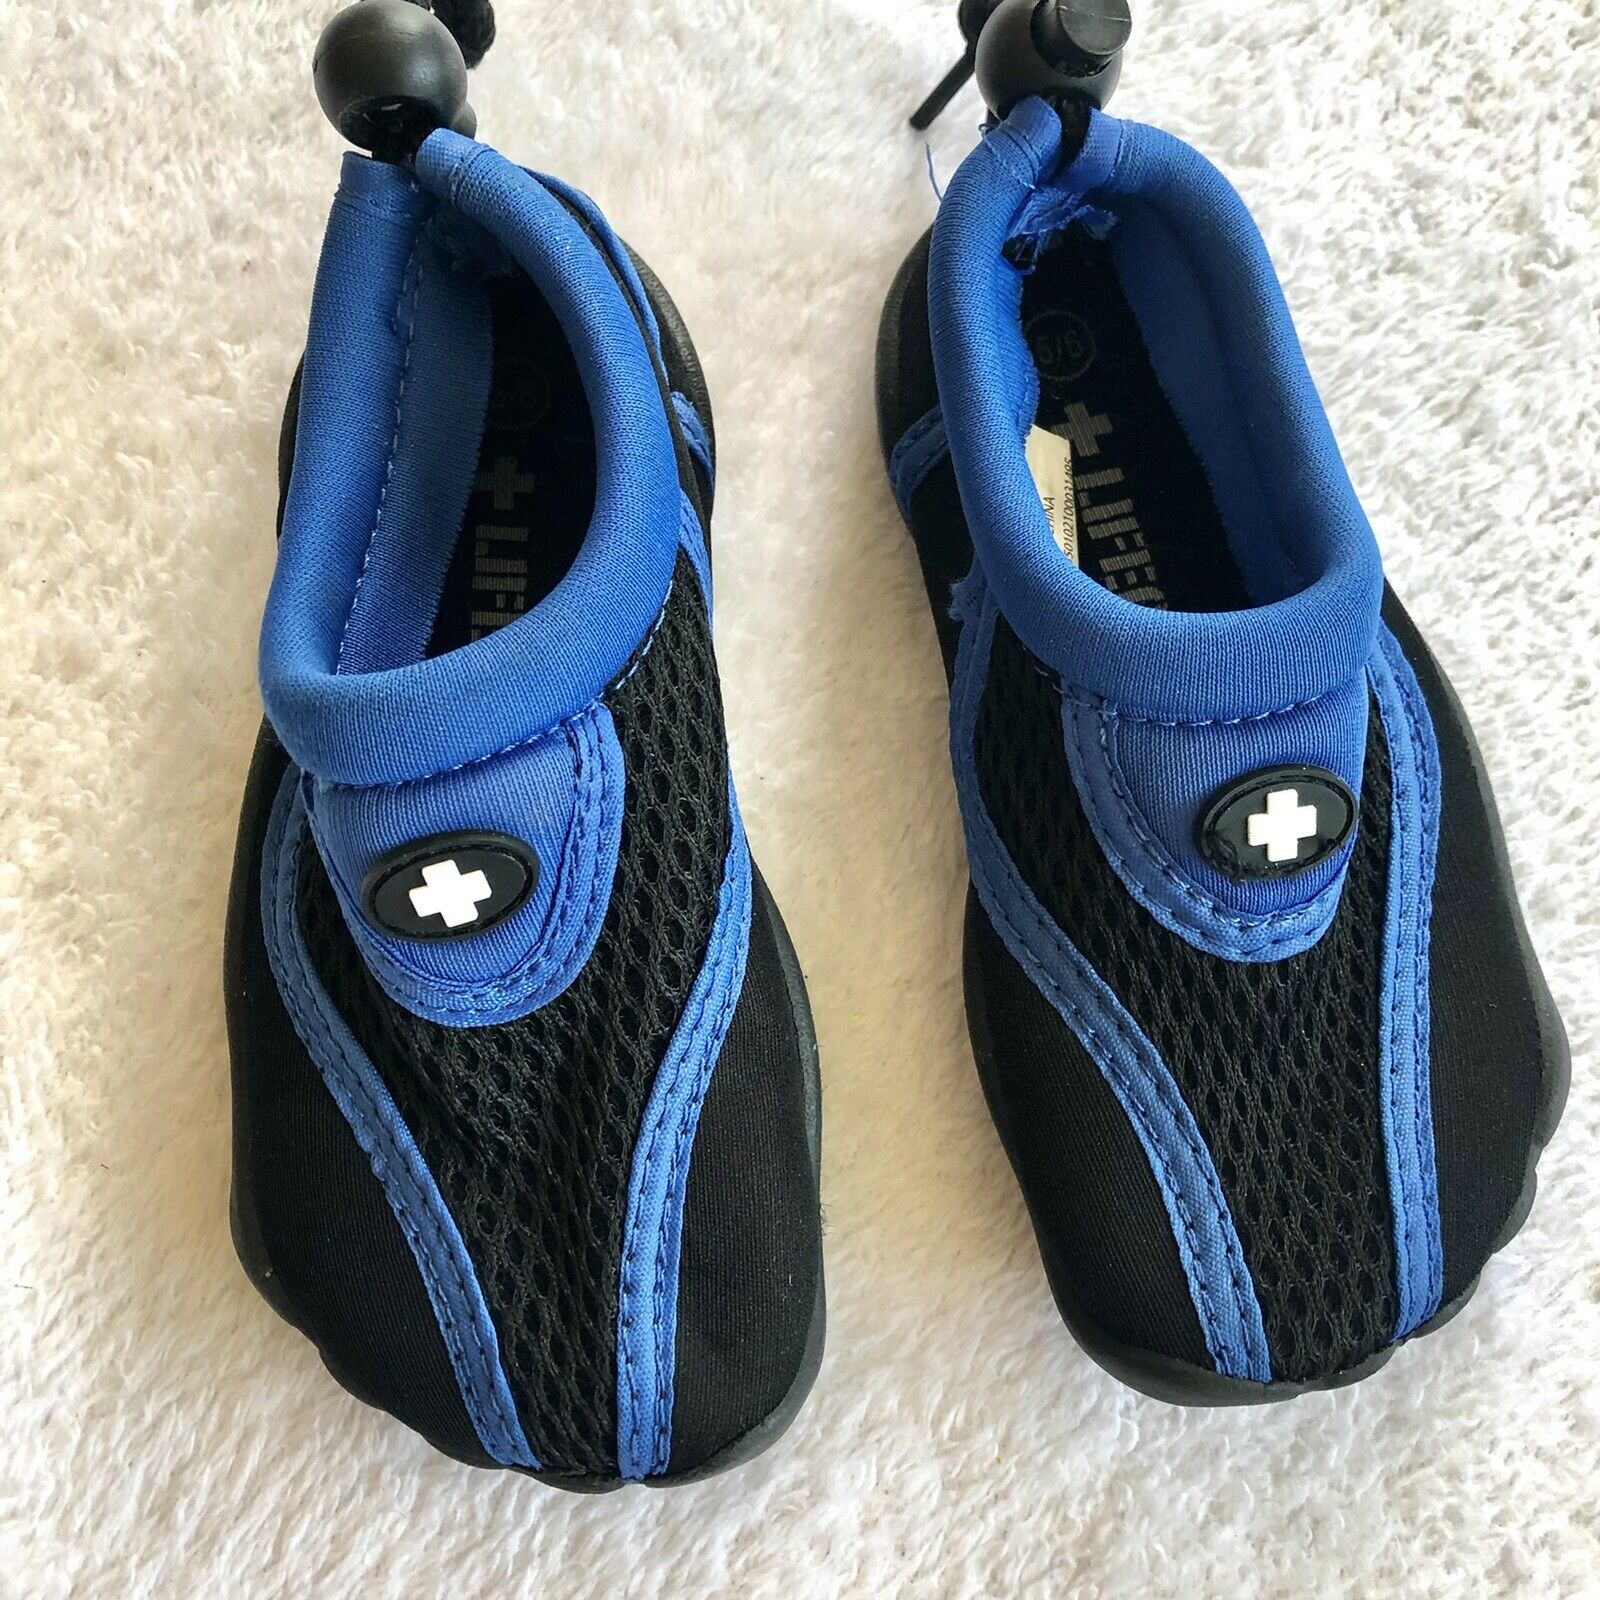 Toddler Boys Size 5/6 Water Shoes Lifeguard Blue Black Bungee Mesh Rubber Bottom